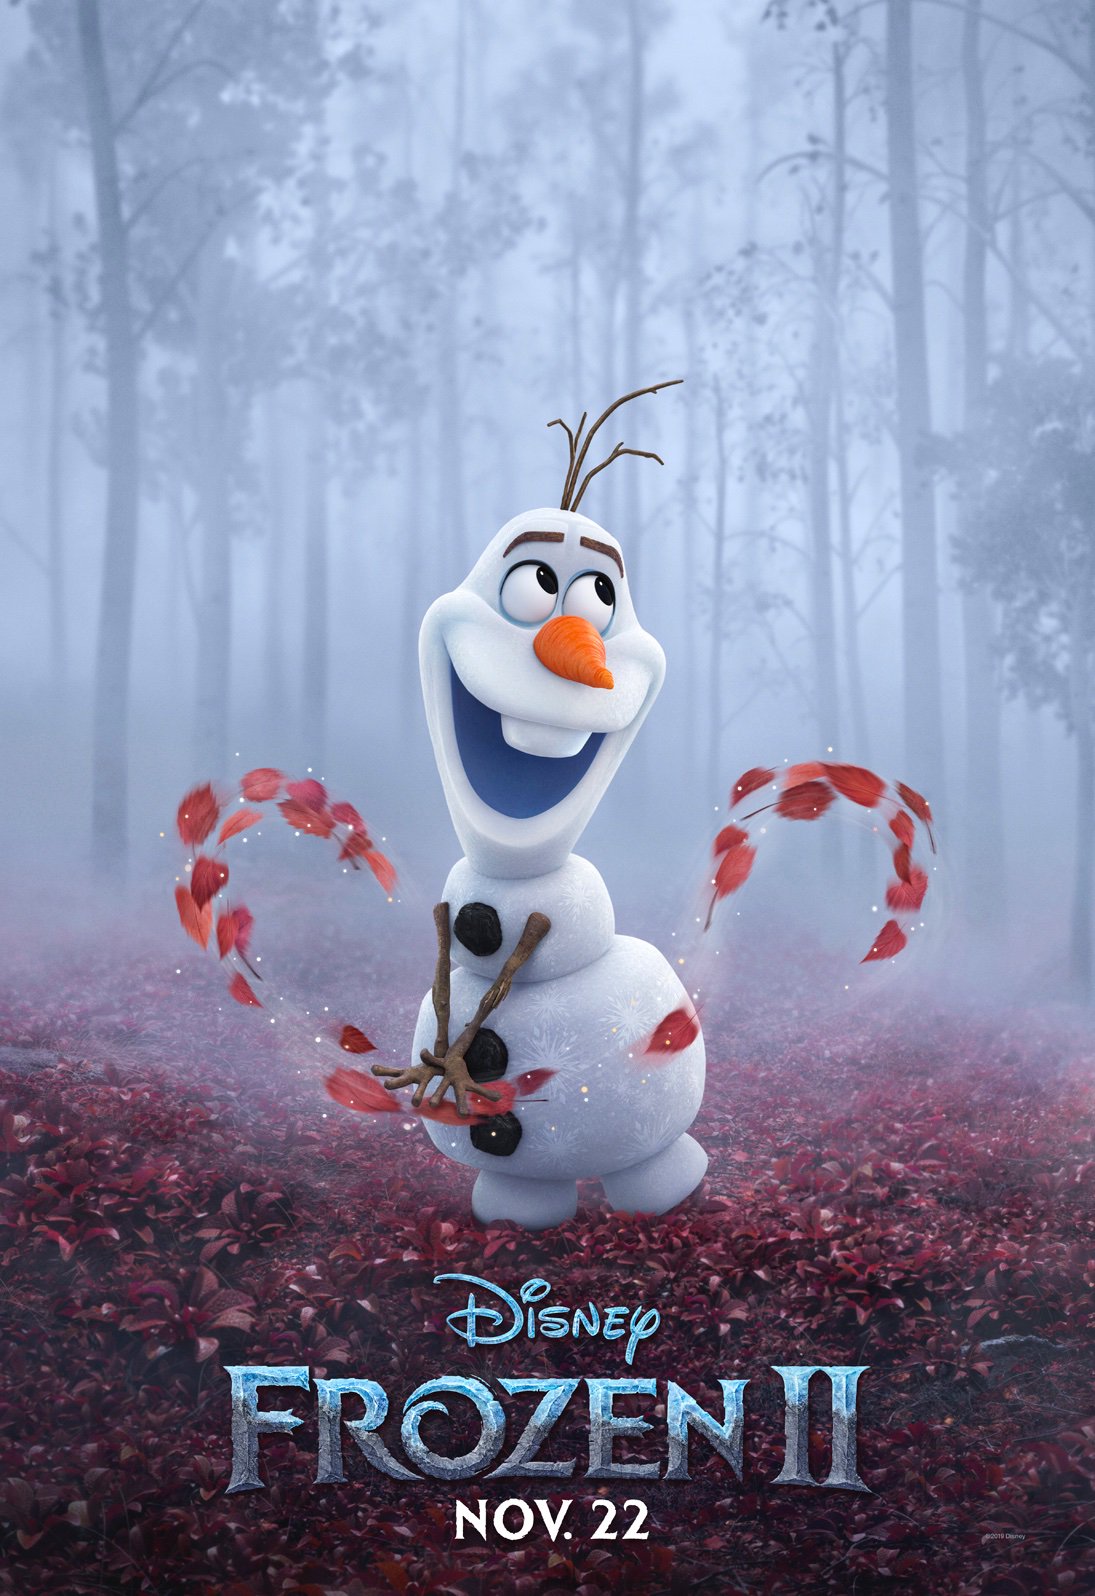 Disney's Frozen In Summer Sequence Performed by Josh Gad  Frozen disney,  Papel tapiz disney, Fondo de pantalla de frozen